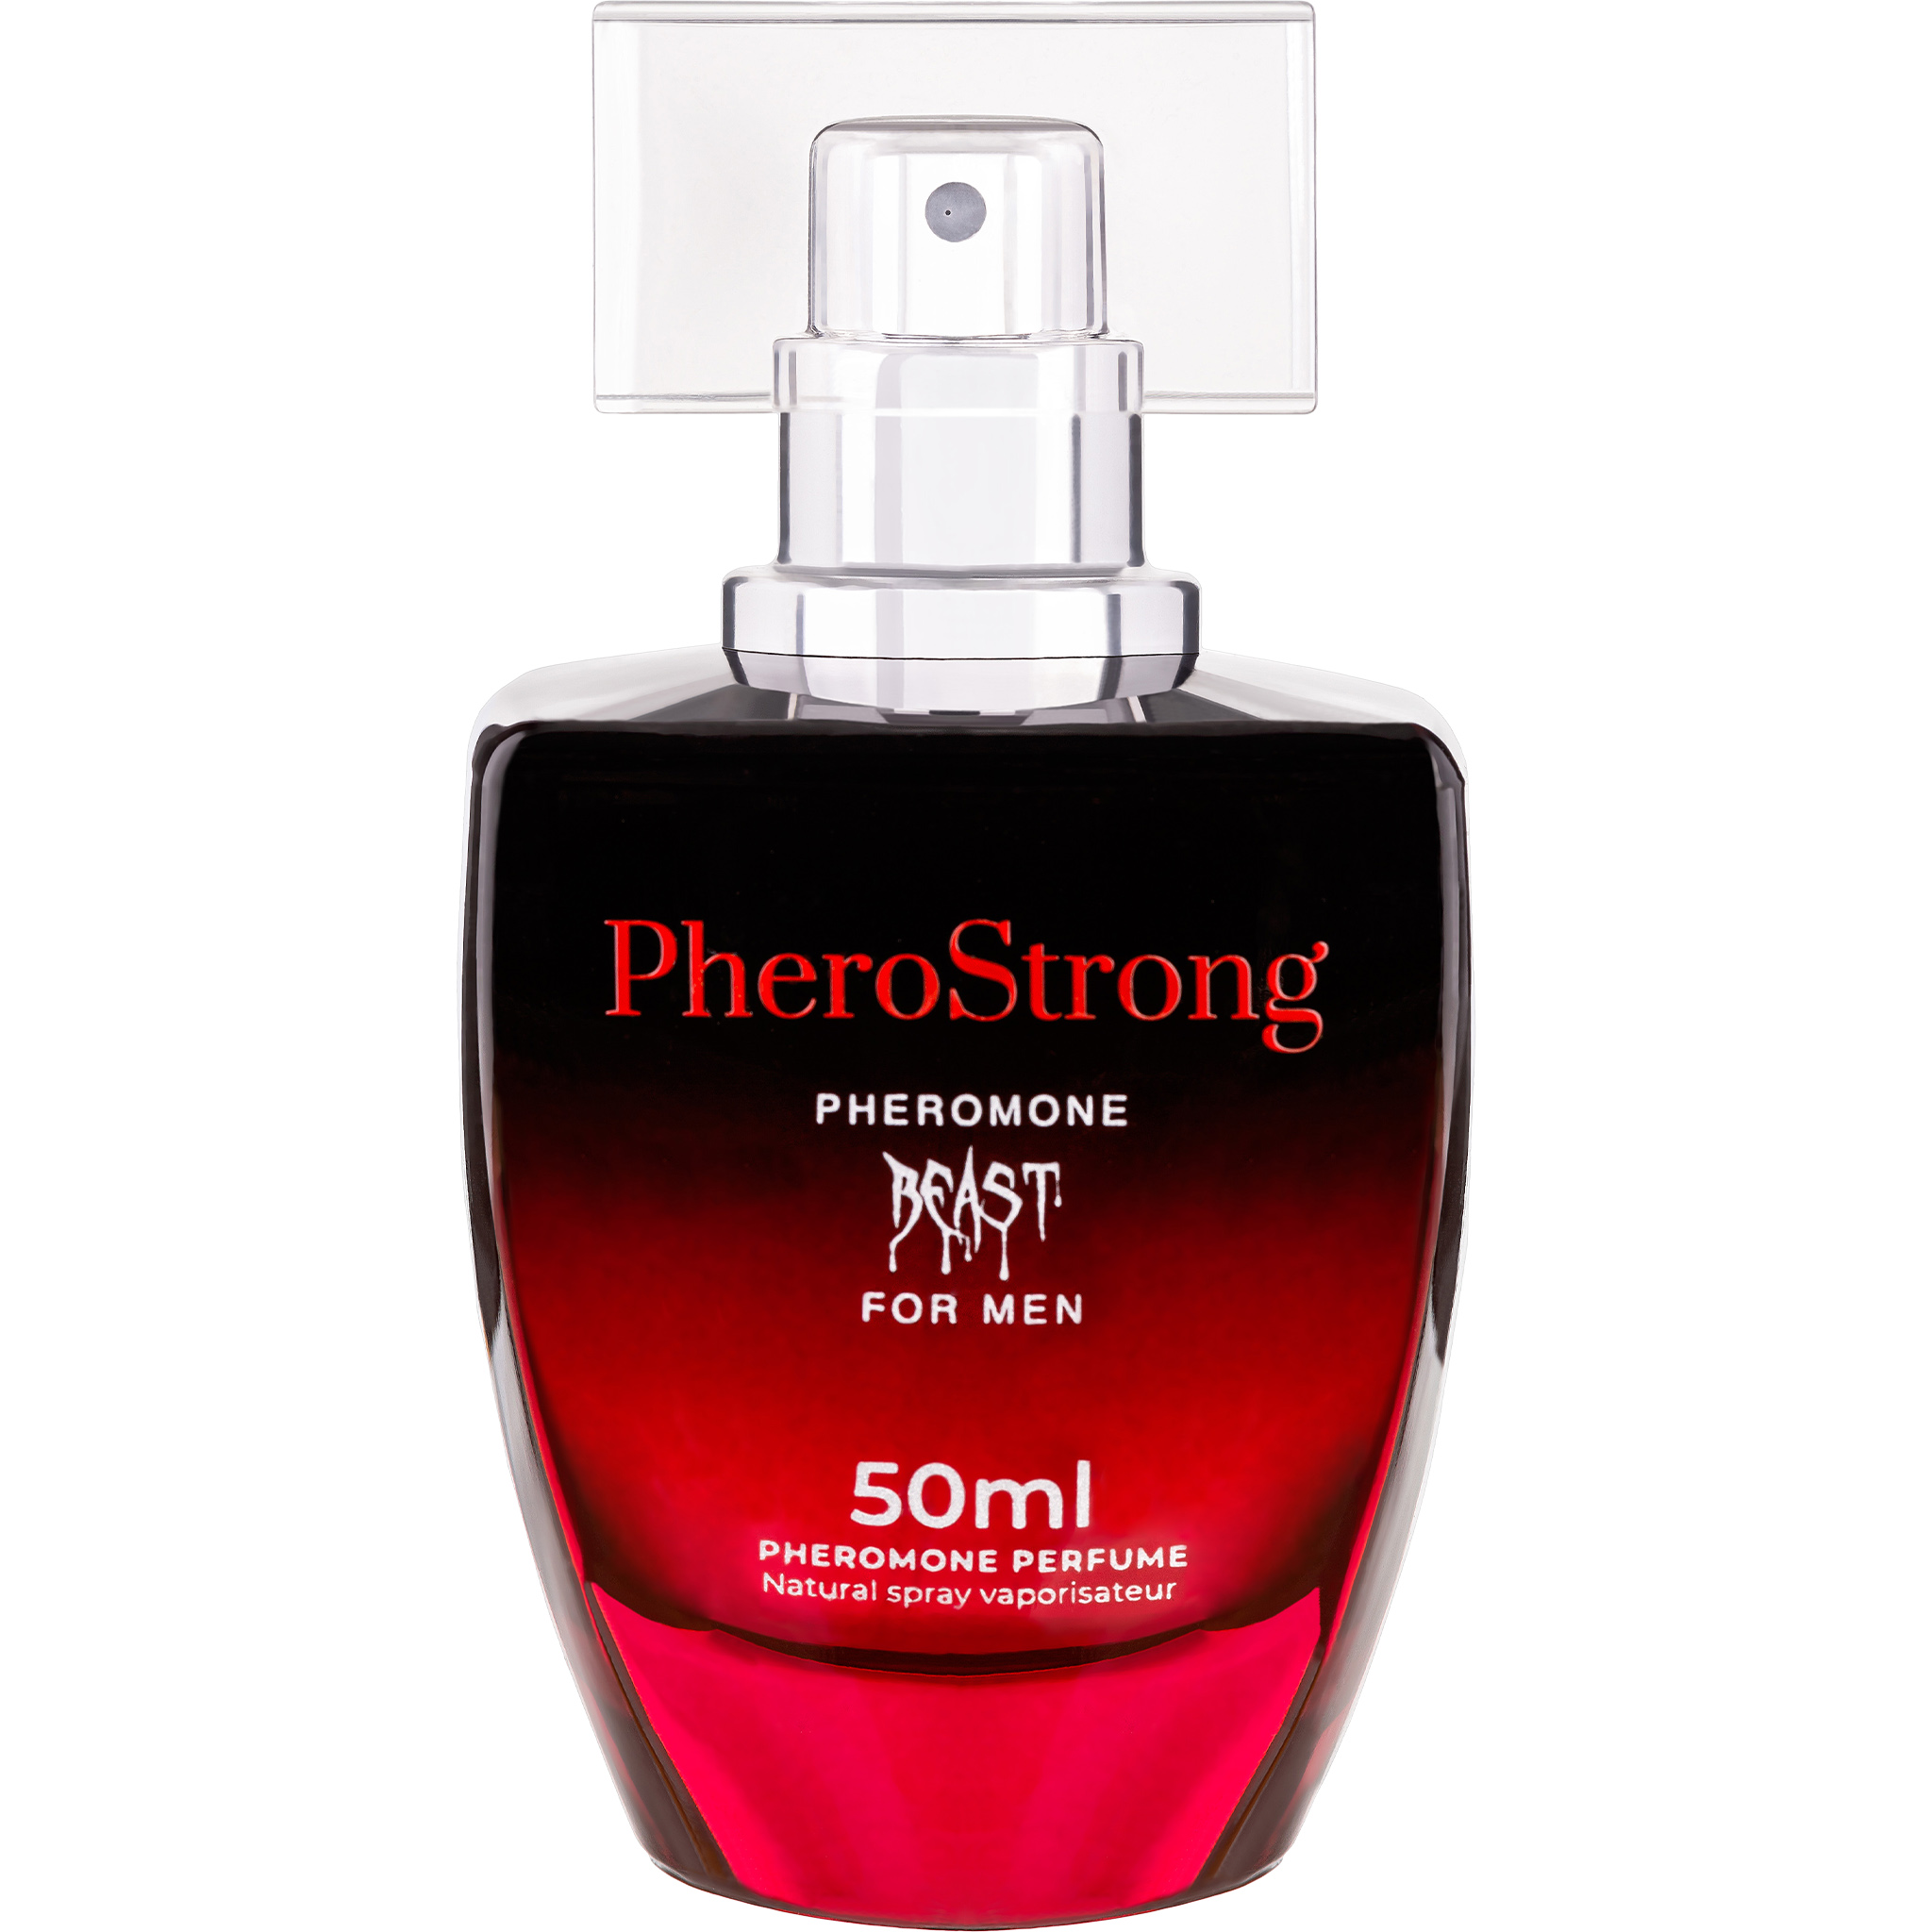 PheroStrong Pheromone Parfum Beast for Men 50ml